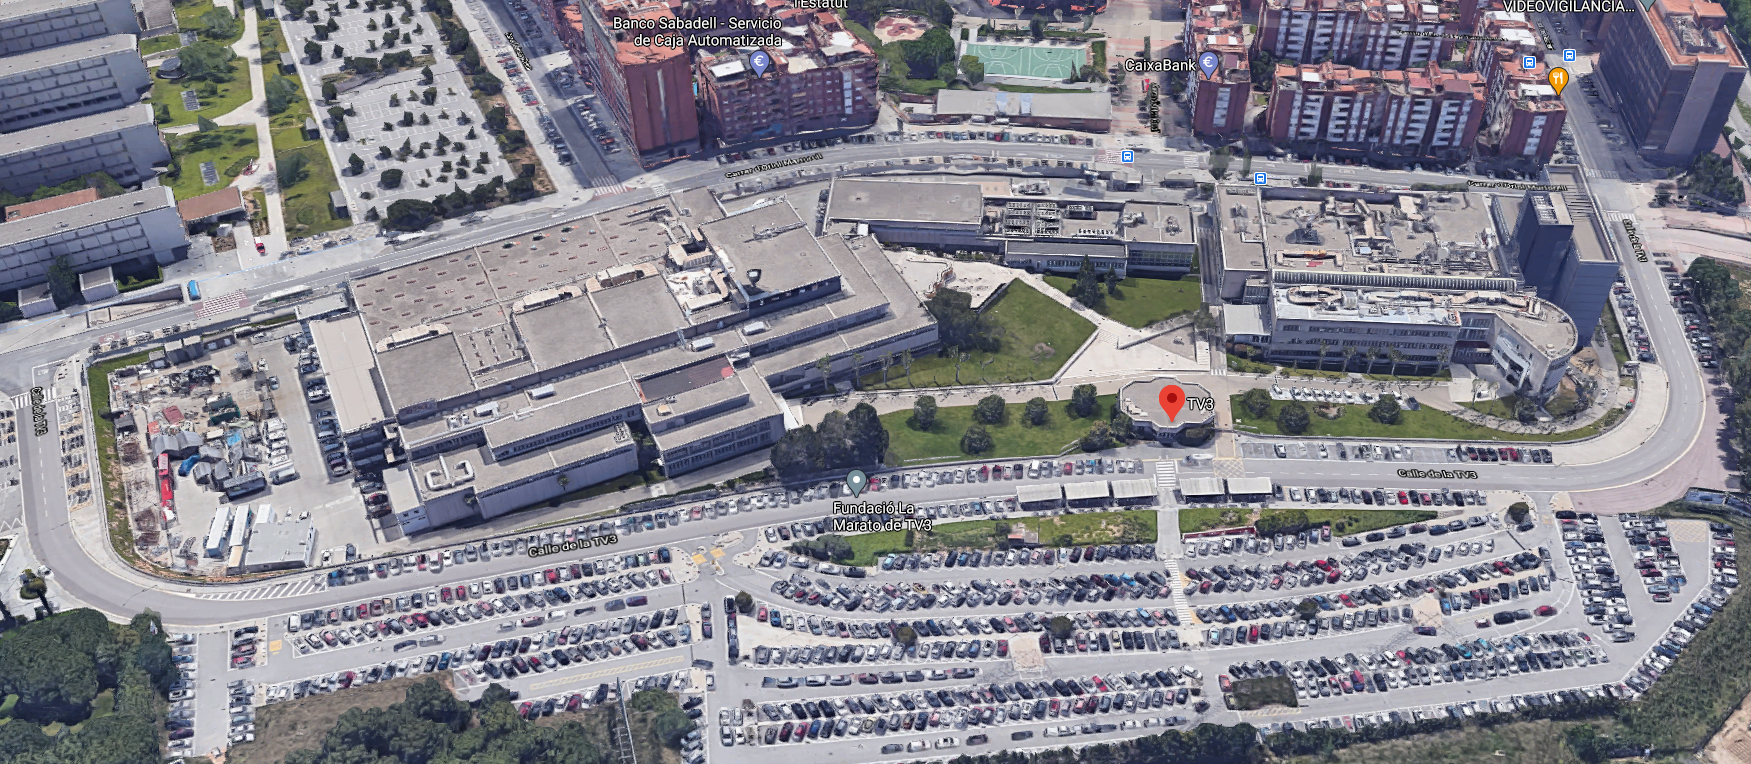 Estudios TV3 Google Maps